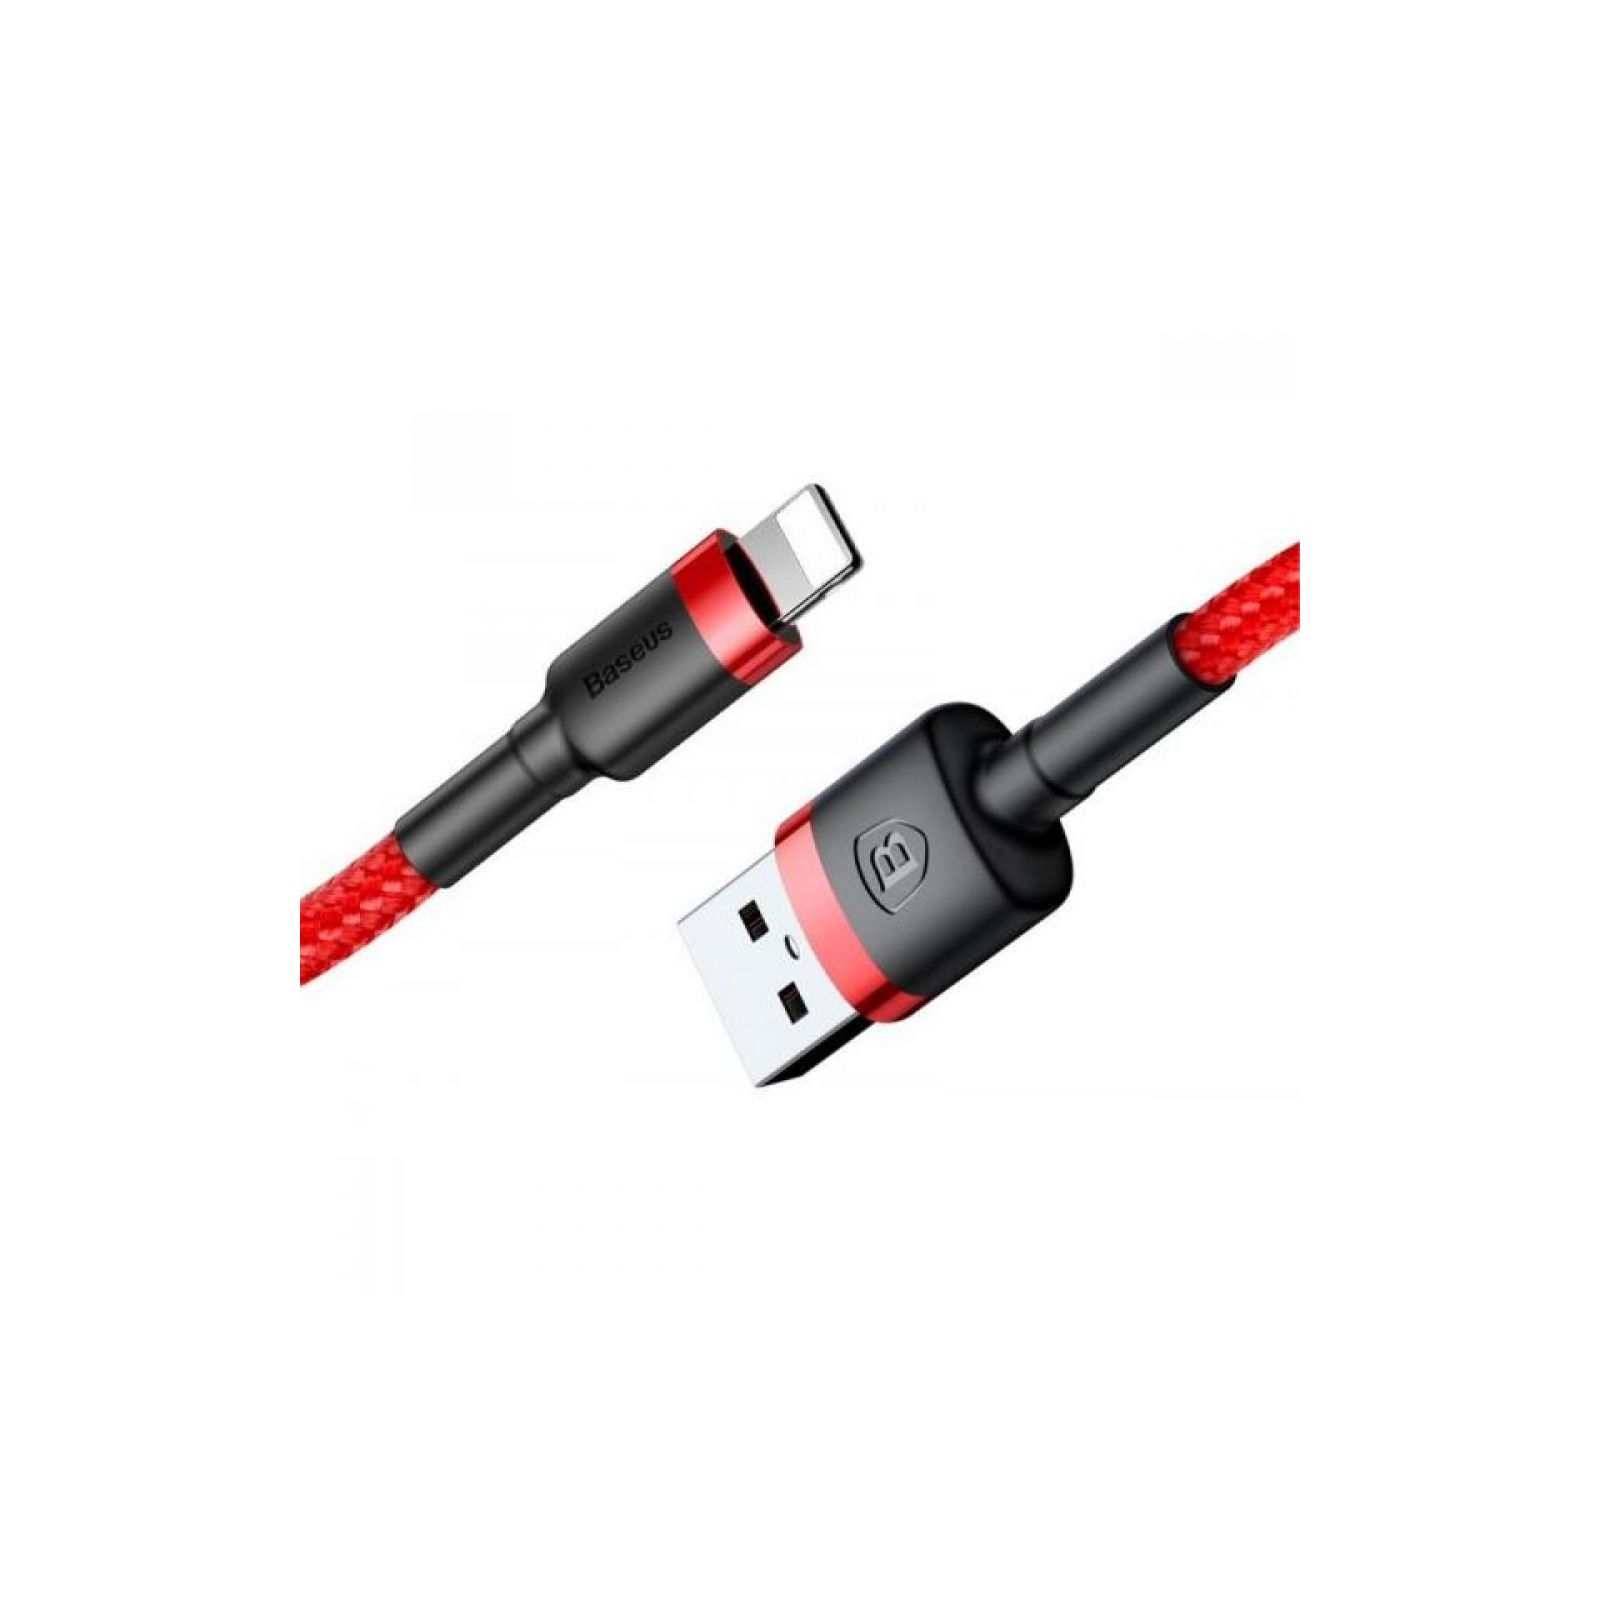 Дата кабель USB 2.0 AM to Lightning 1.0m Cafule 2.4A red+red Baseus (CALKLF-B09) зображення 3